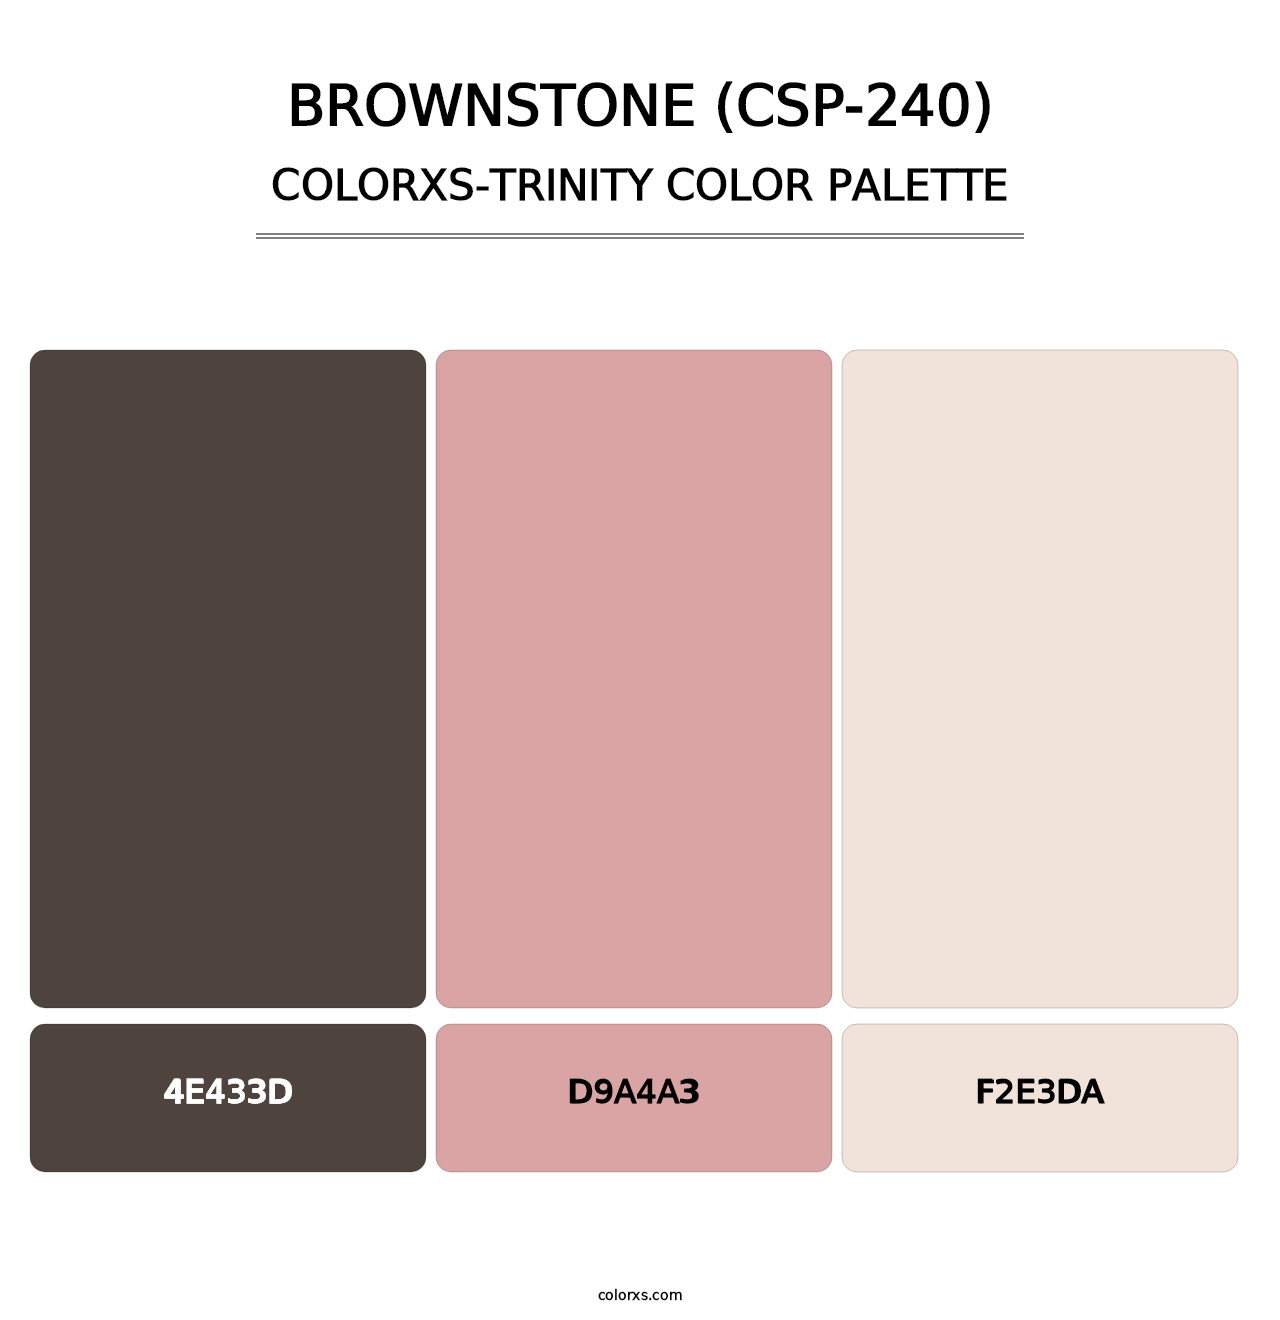 Brownstone (CSP-240) - Colorxs Trinity Palette